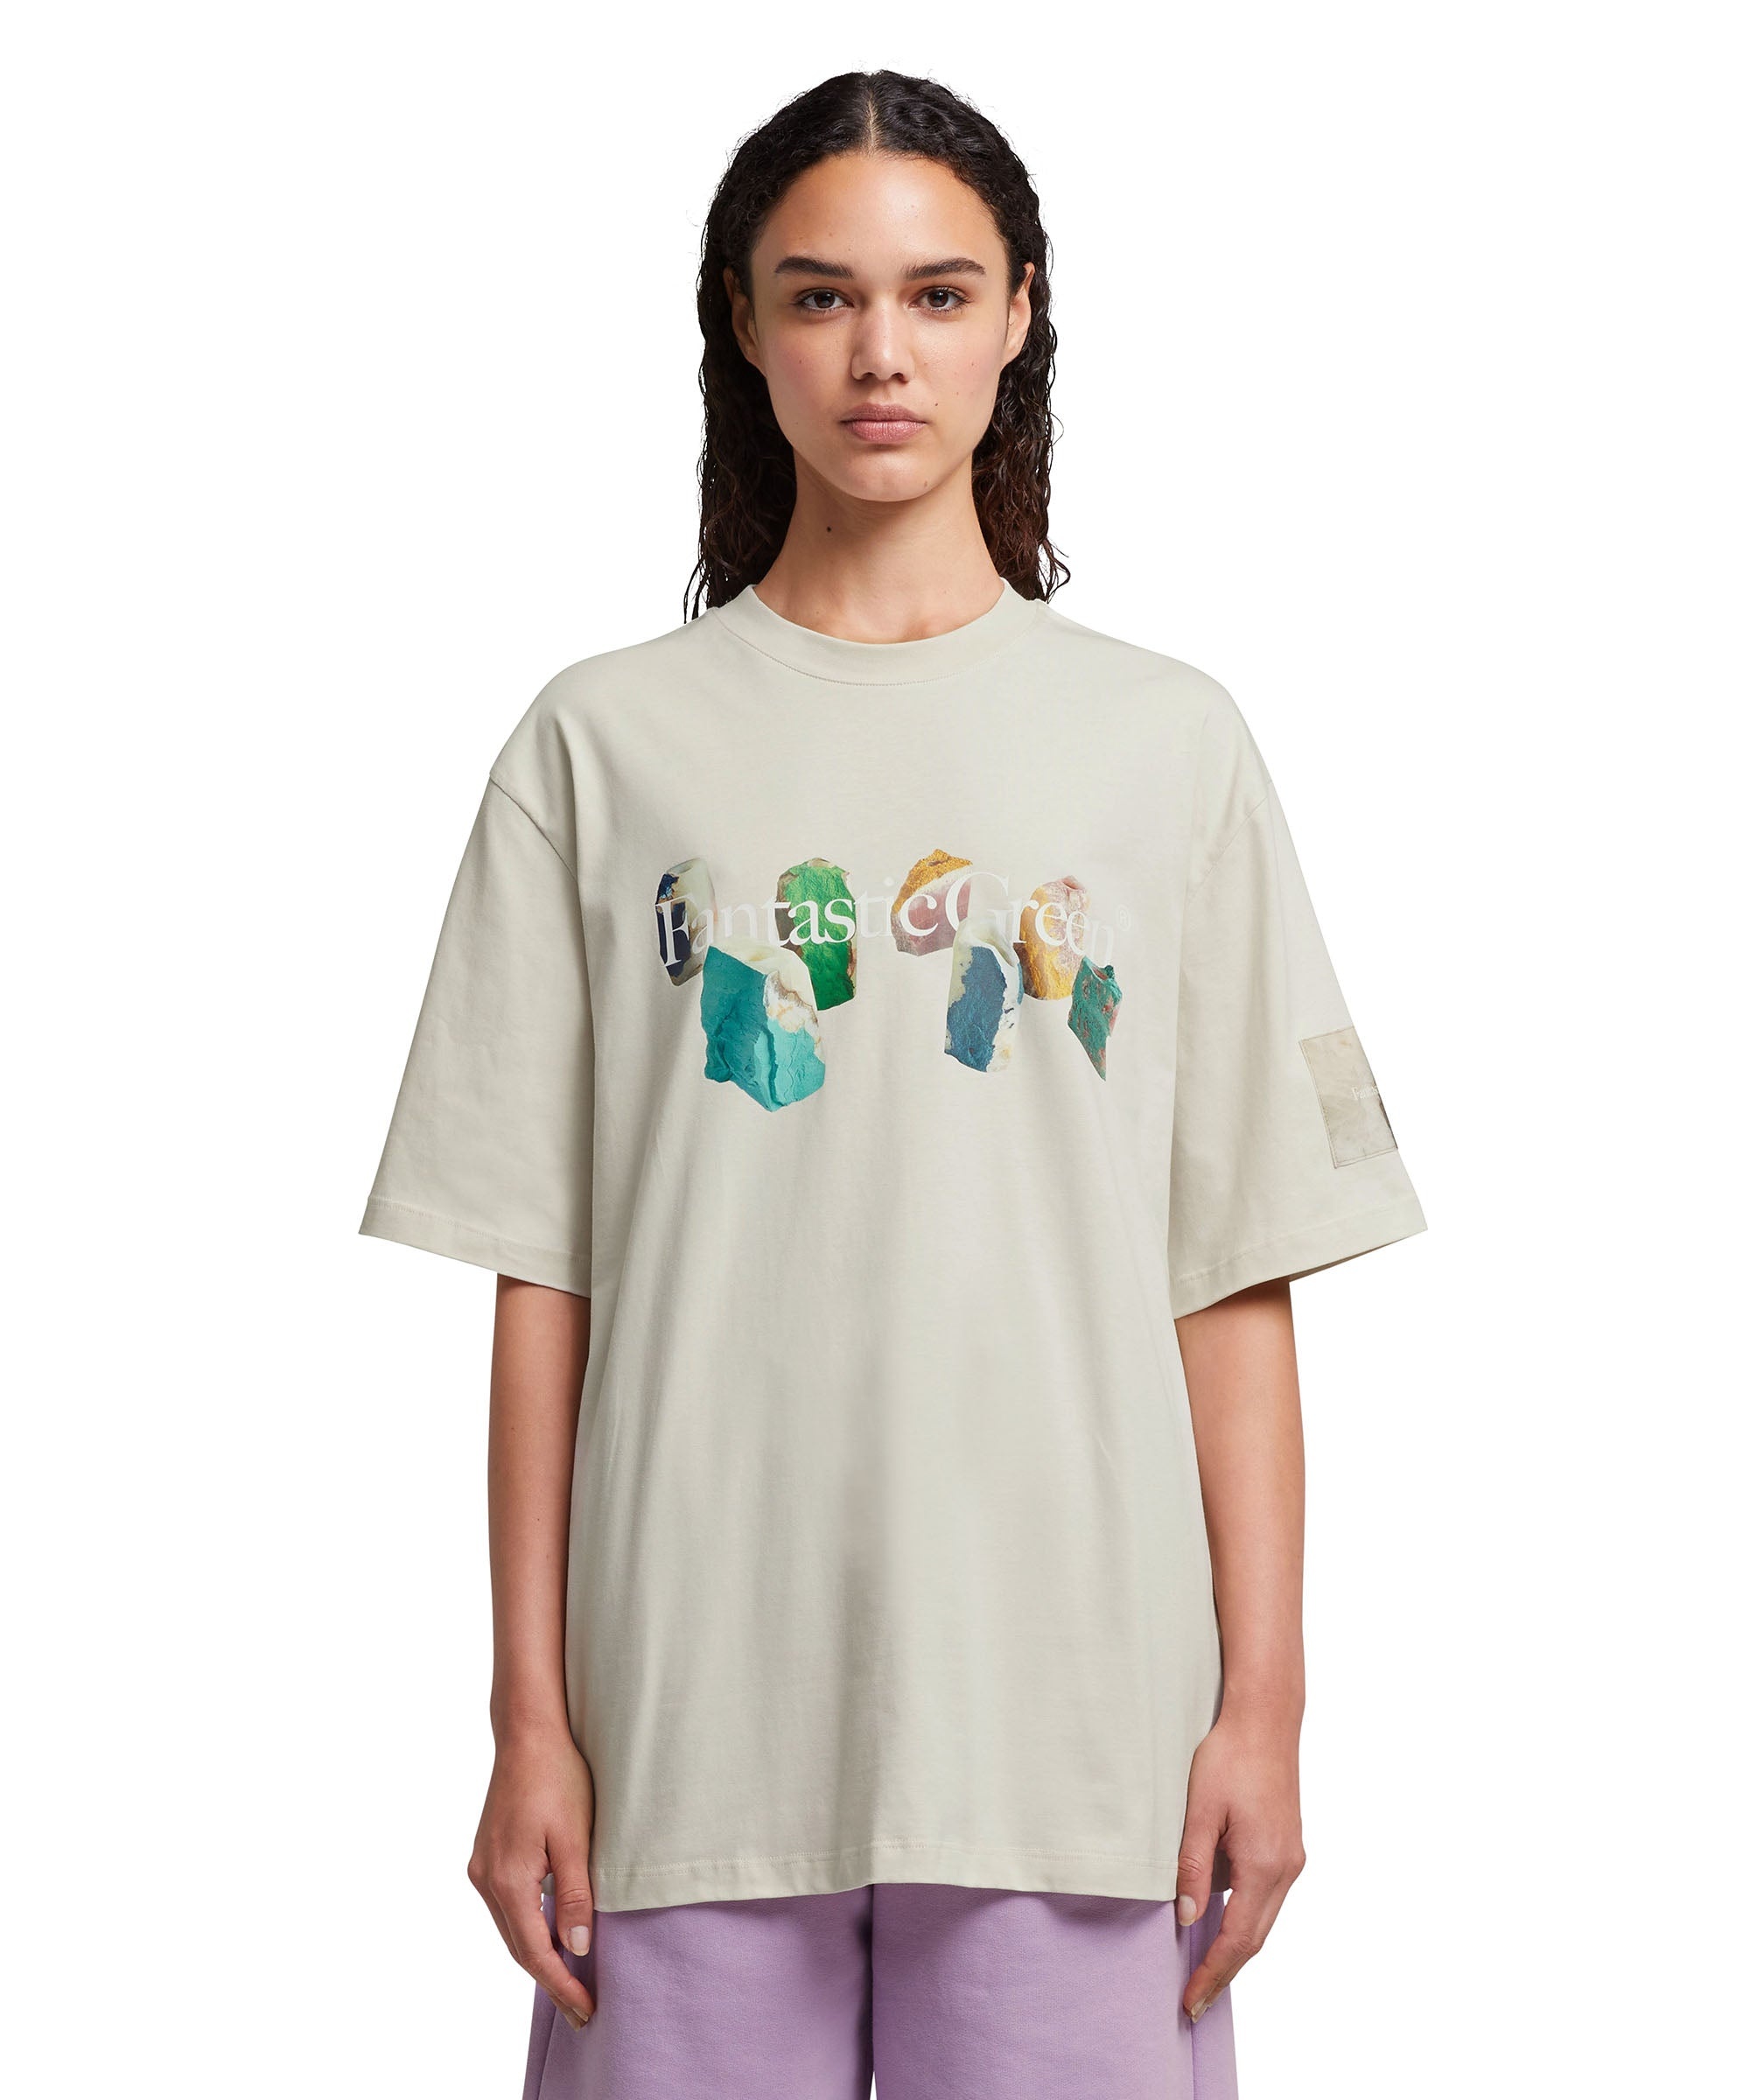 "FANTASTIC GREEN INVERSE SERIES" organic jersey cotton T-Shirt - 6